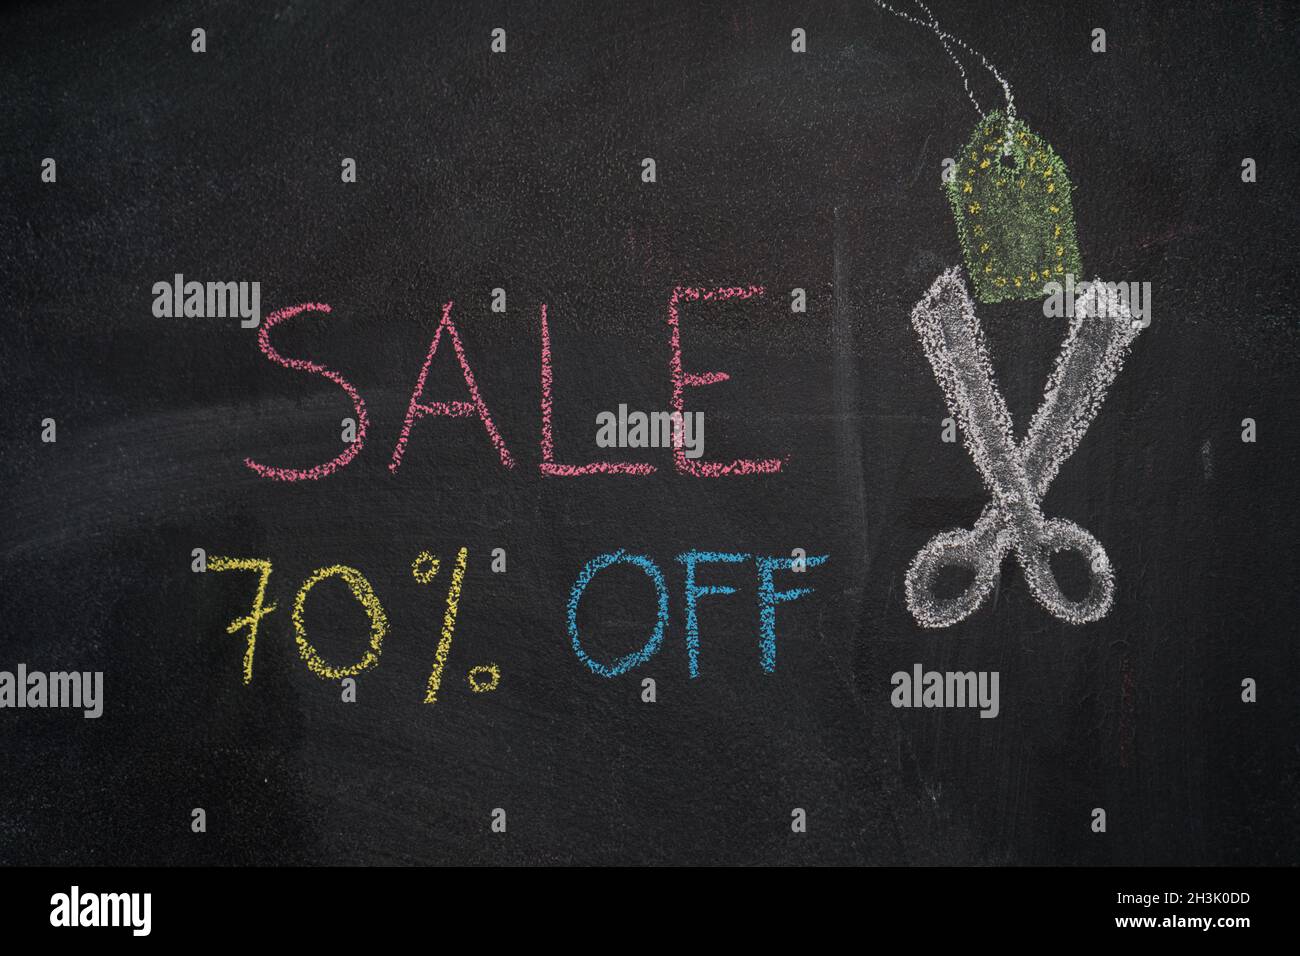 Sale 70% off on chalkboard Stock Photo